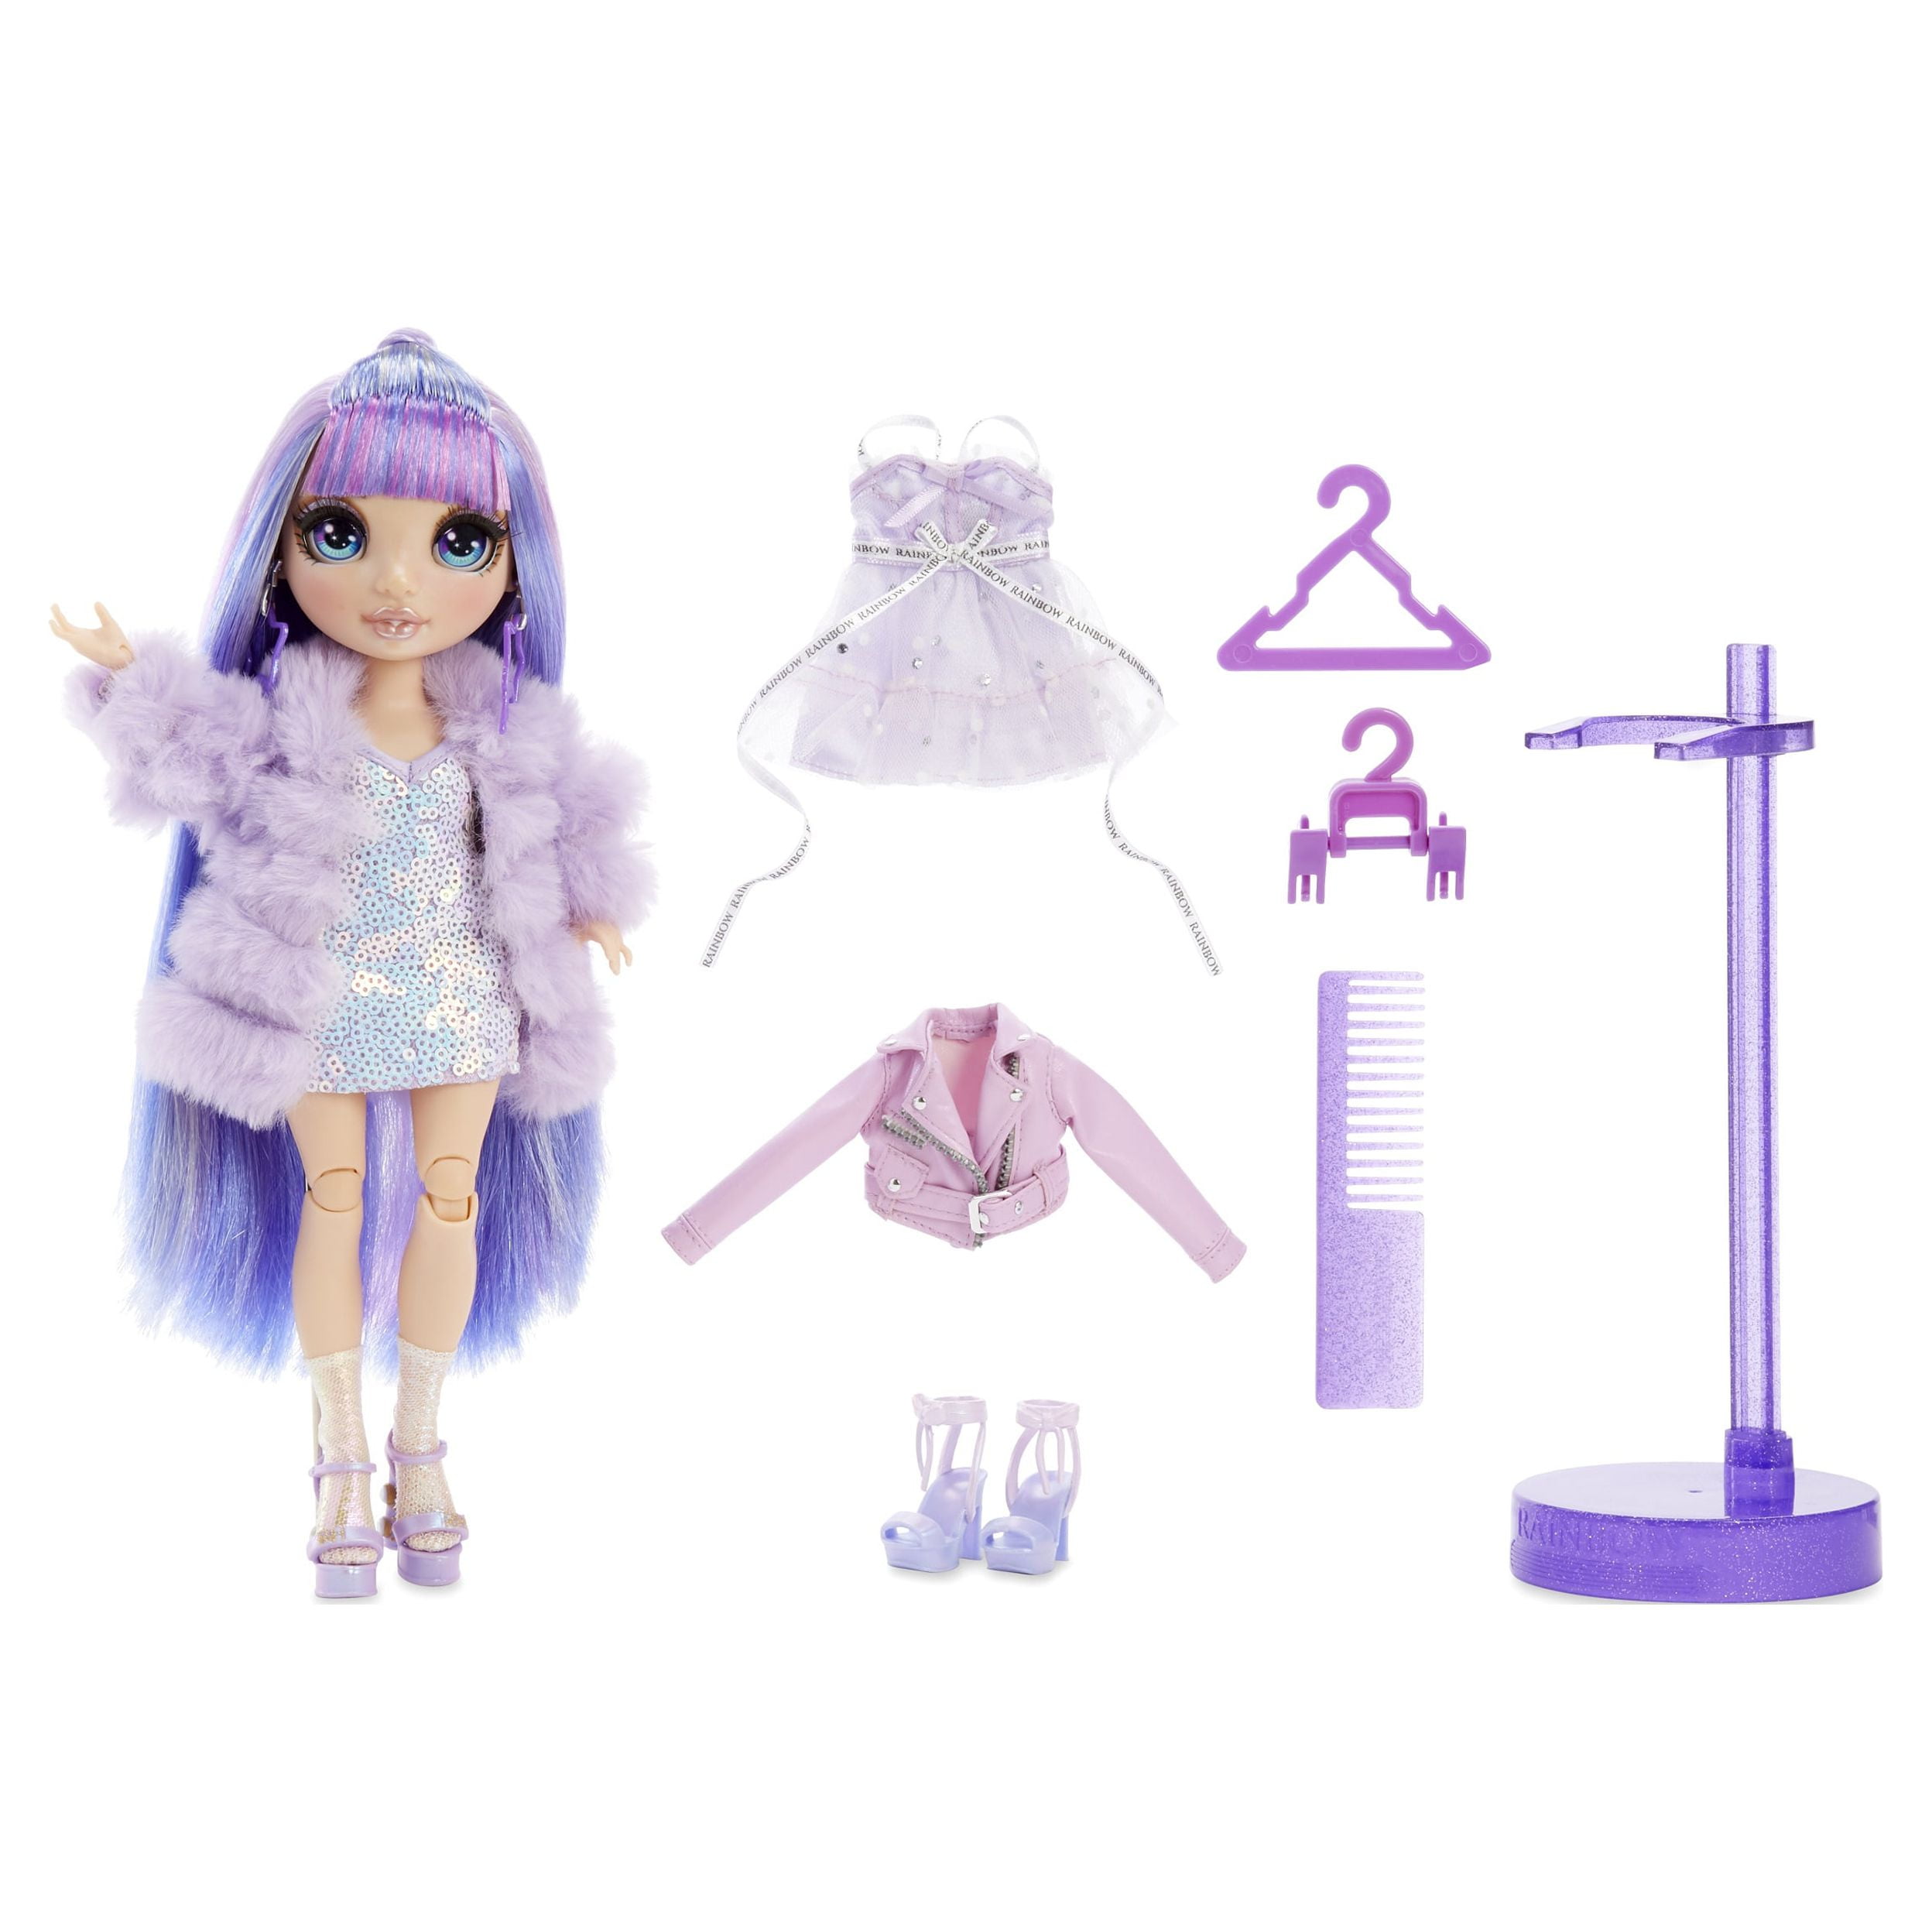 Brinquedo Boneca Rainbow High Fashion Violet Willow Yes Toys